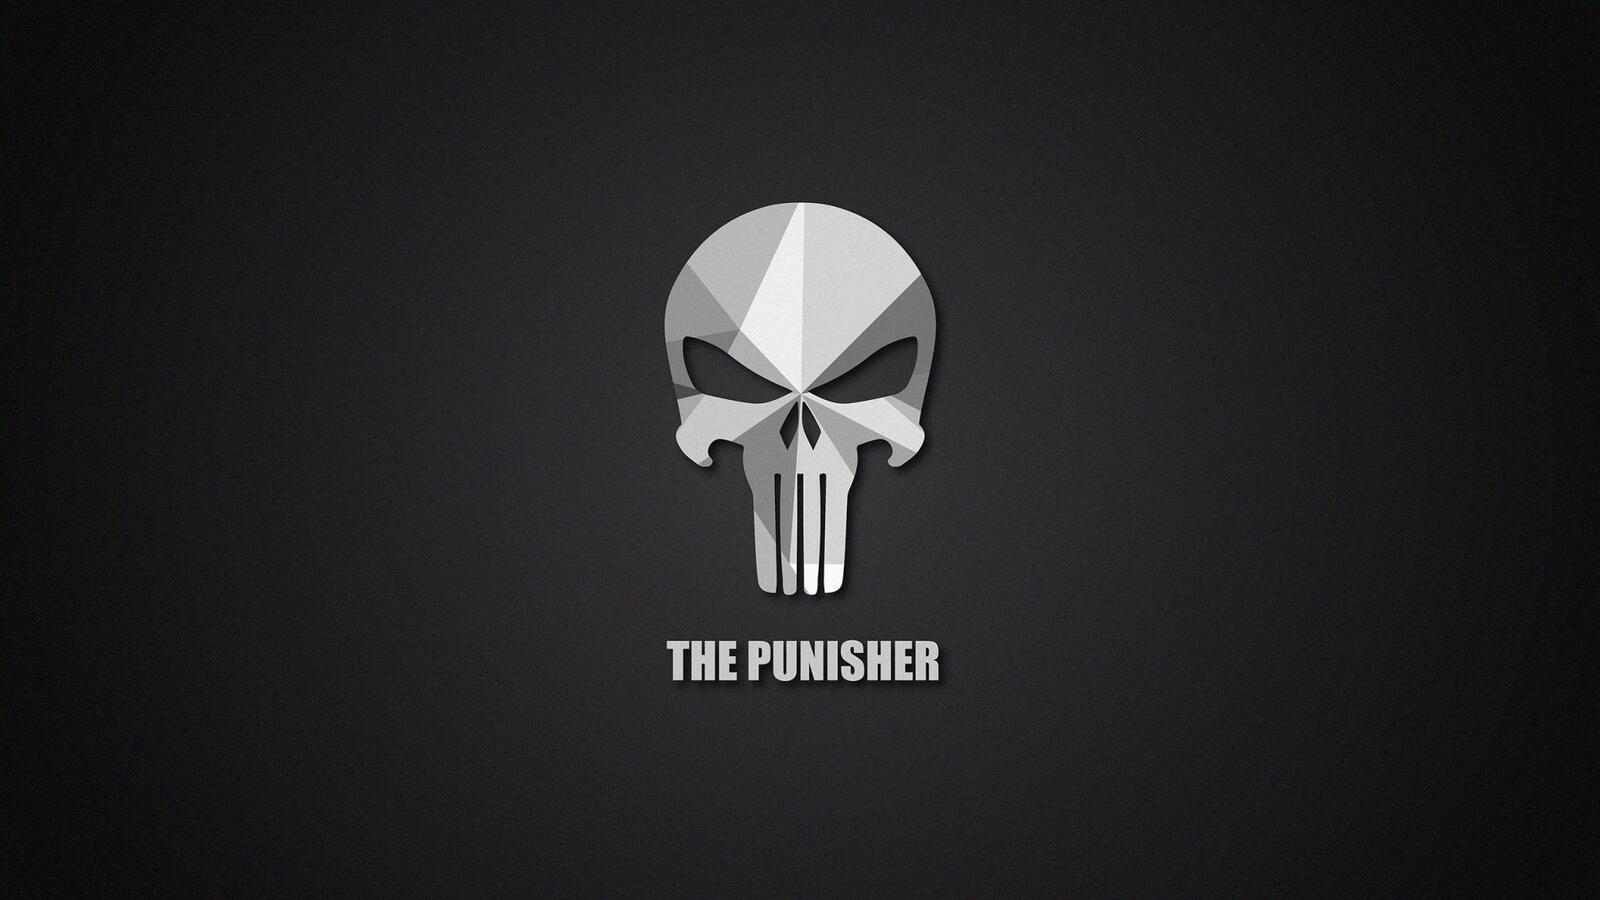 Wallpapers Punisher logo TV show on the desktop